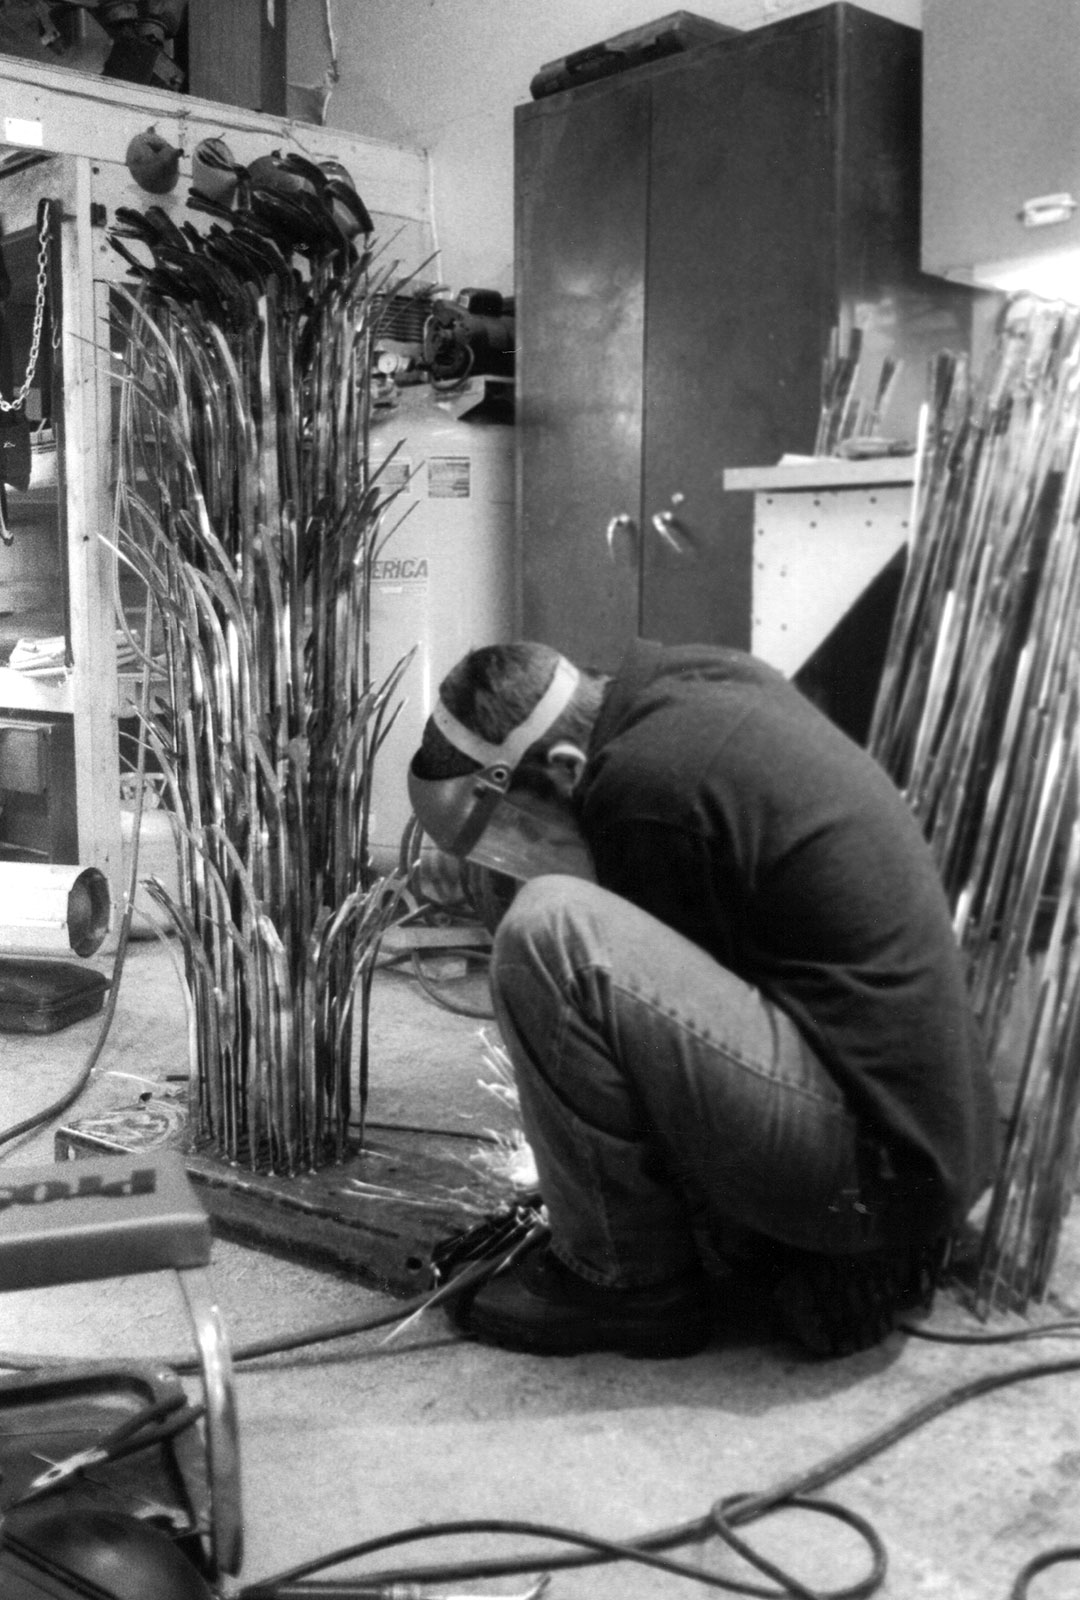 Andy Baack welding the sculpture.